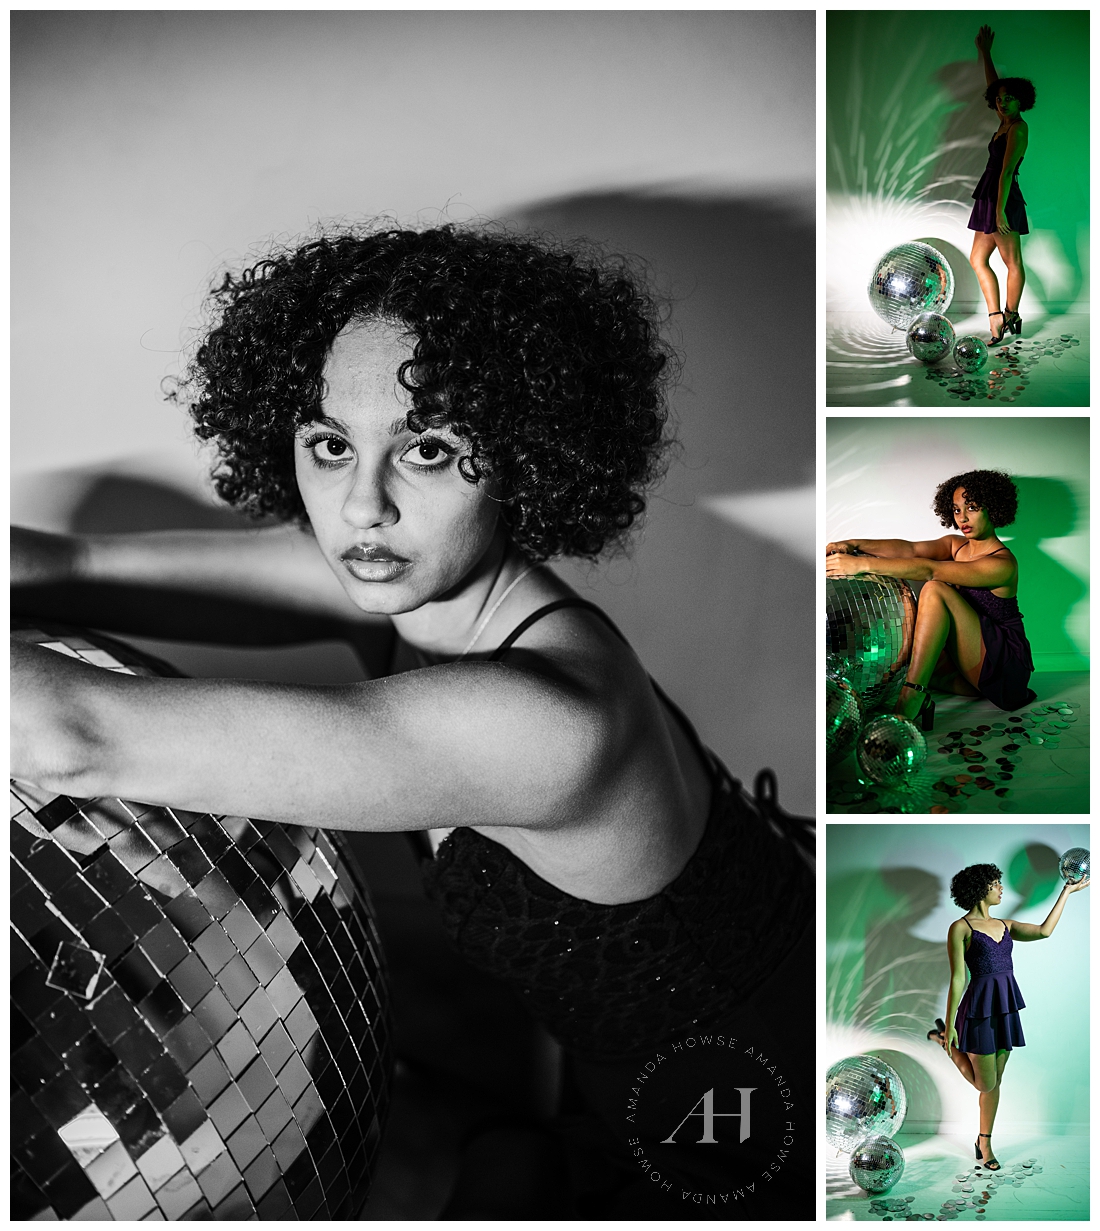 Green and Silver NYE Portraits with Studio Lighting | Amanda Howse Photography 